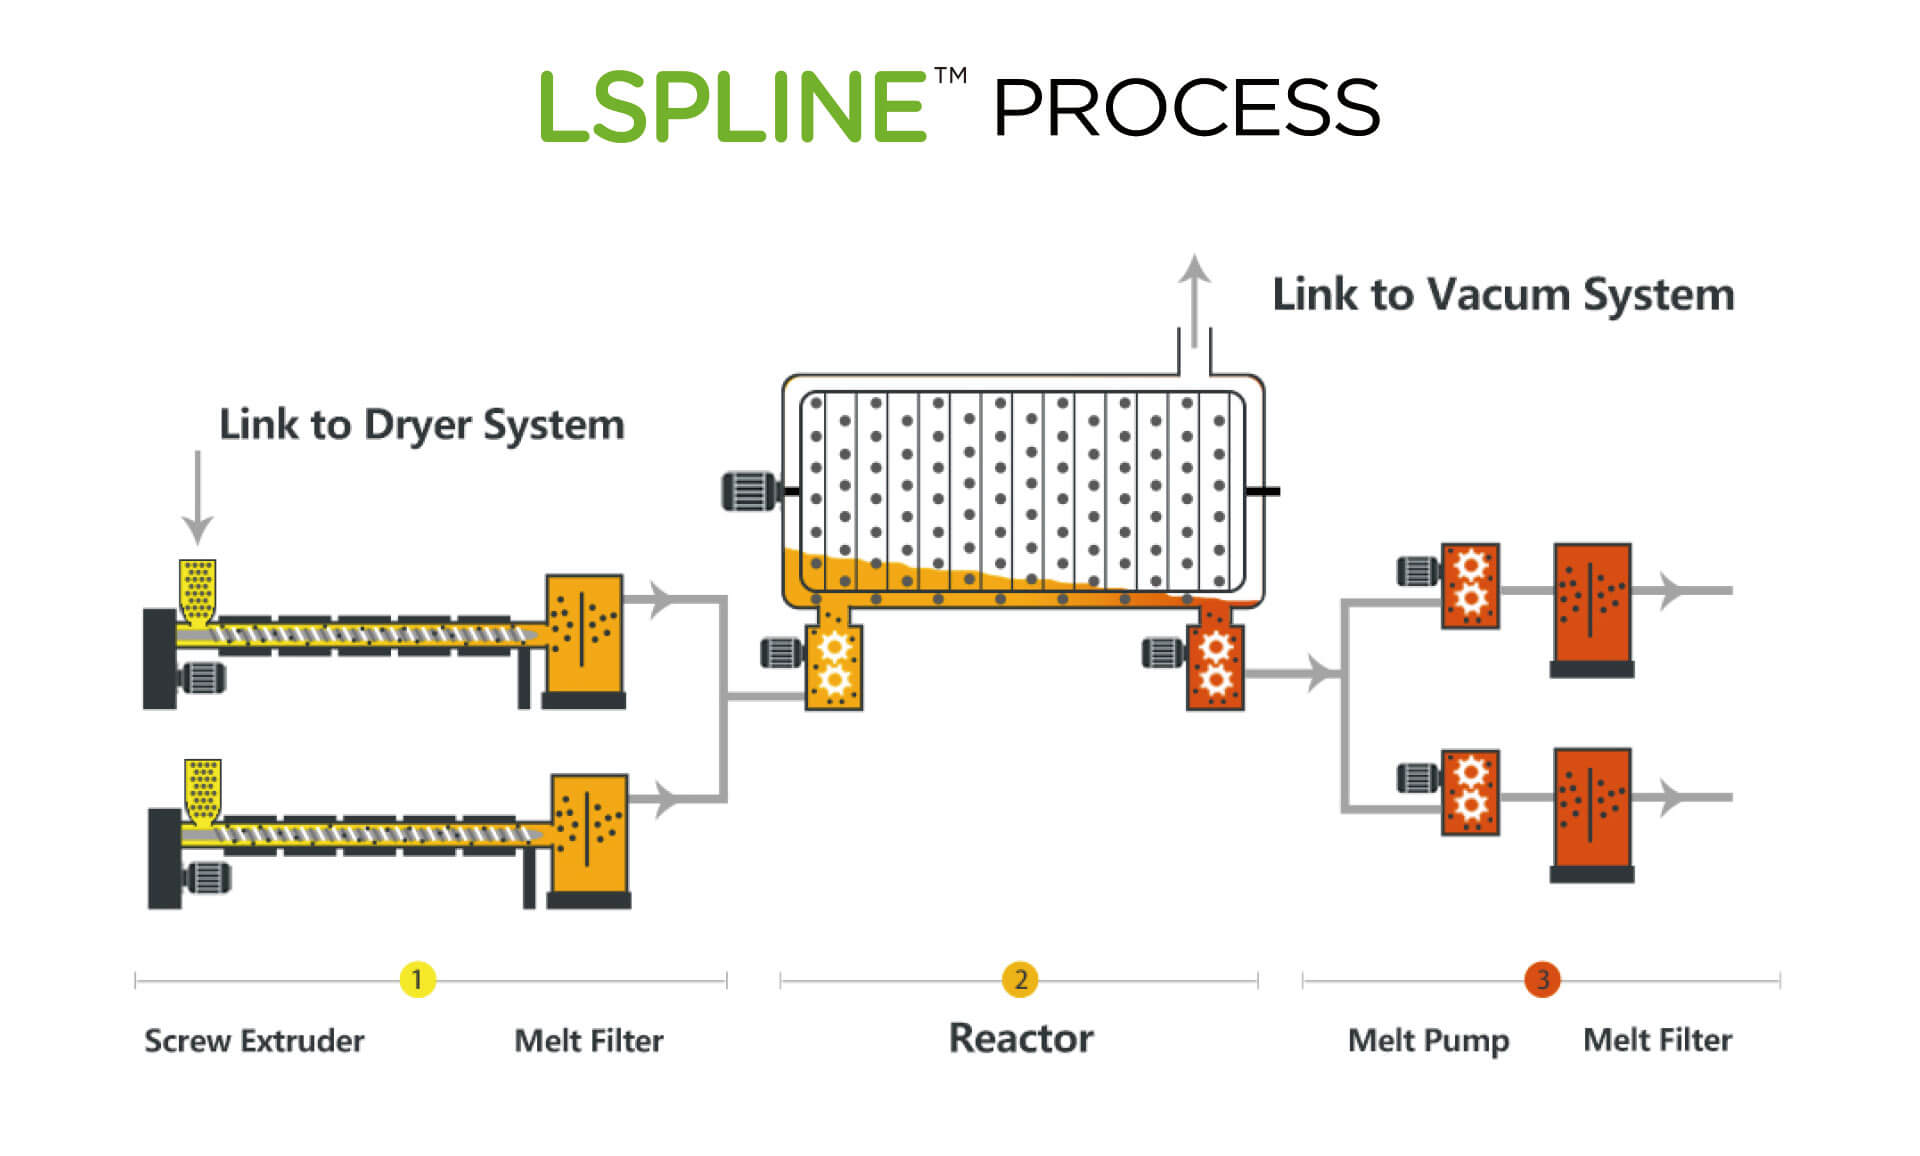 LSPLINE process